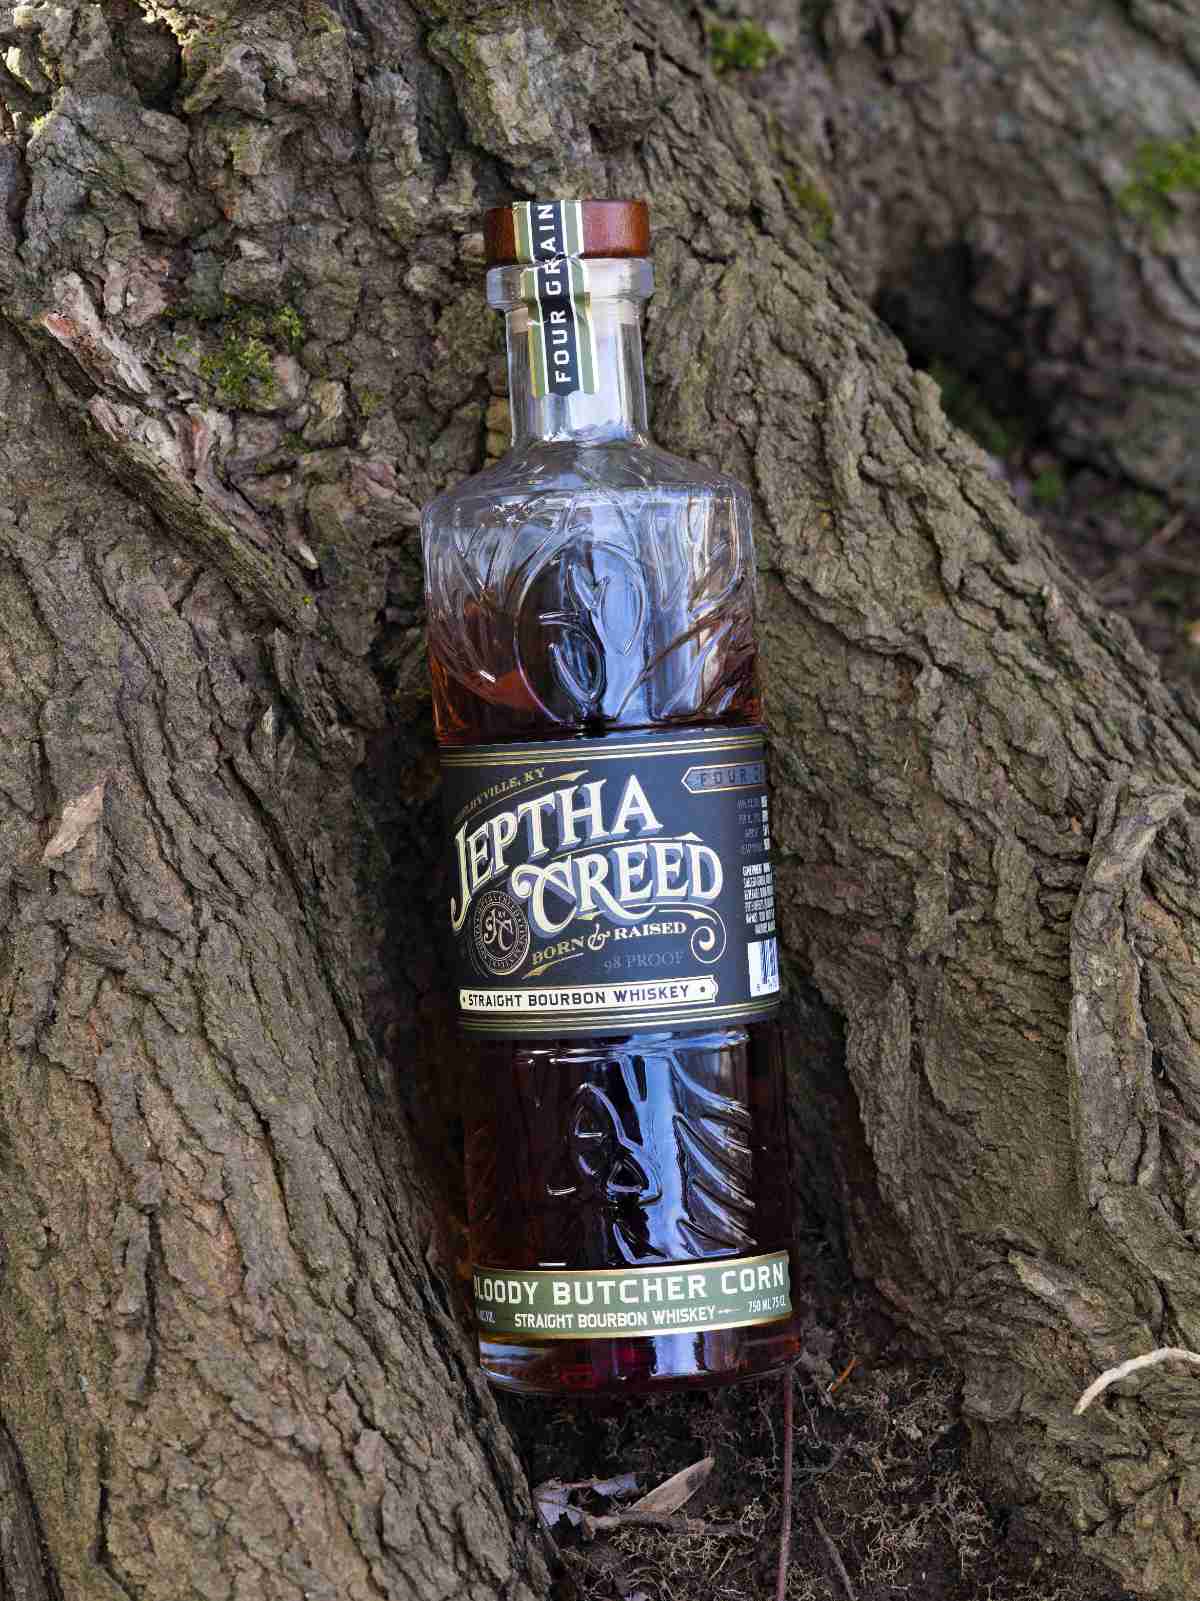 jeptha creed four grain bourbon featured